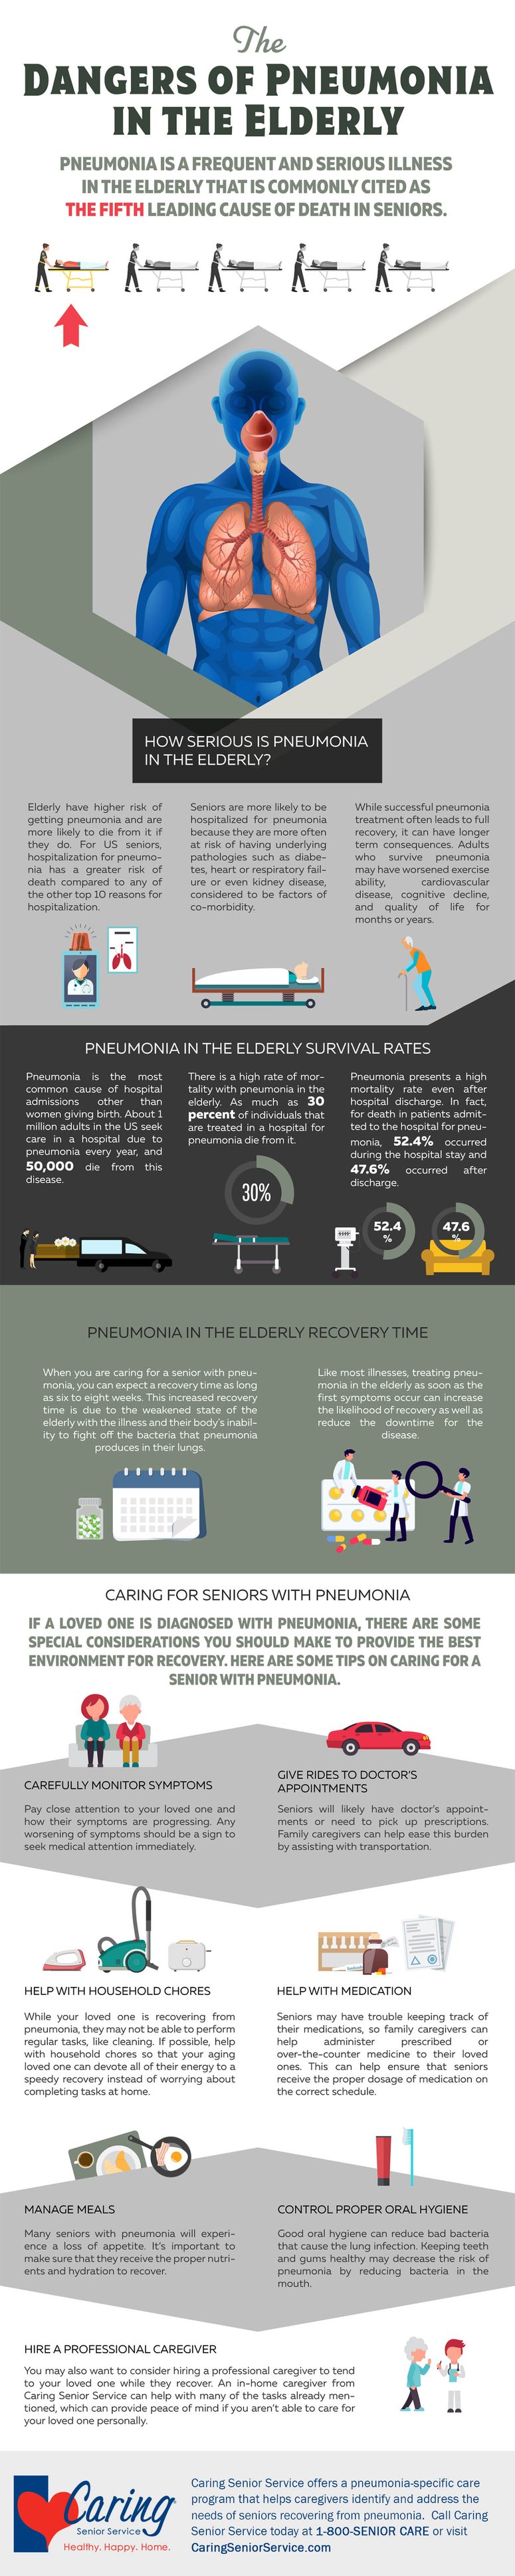 Dangers of Pneumonia in the Elderly infographic